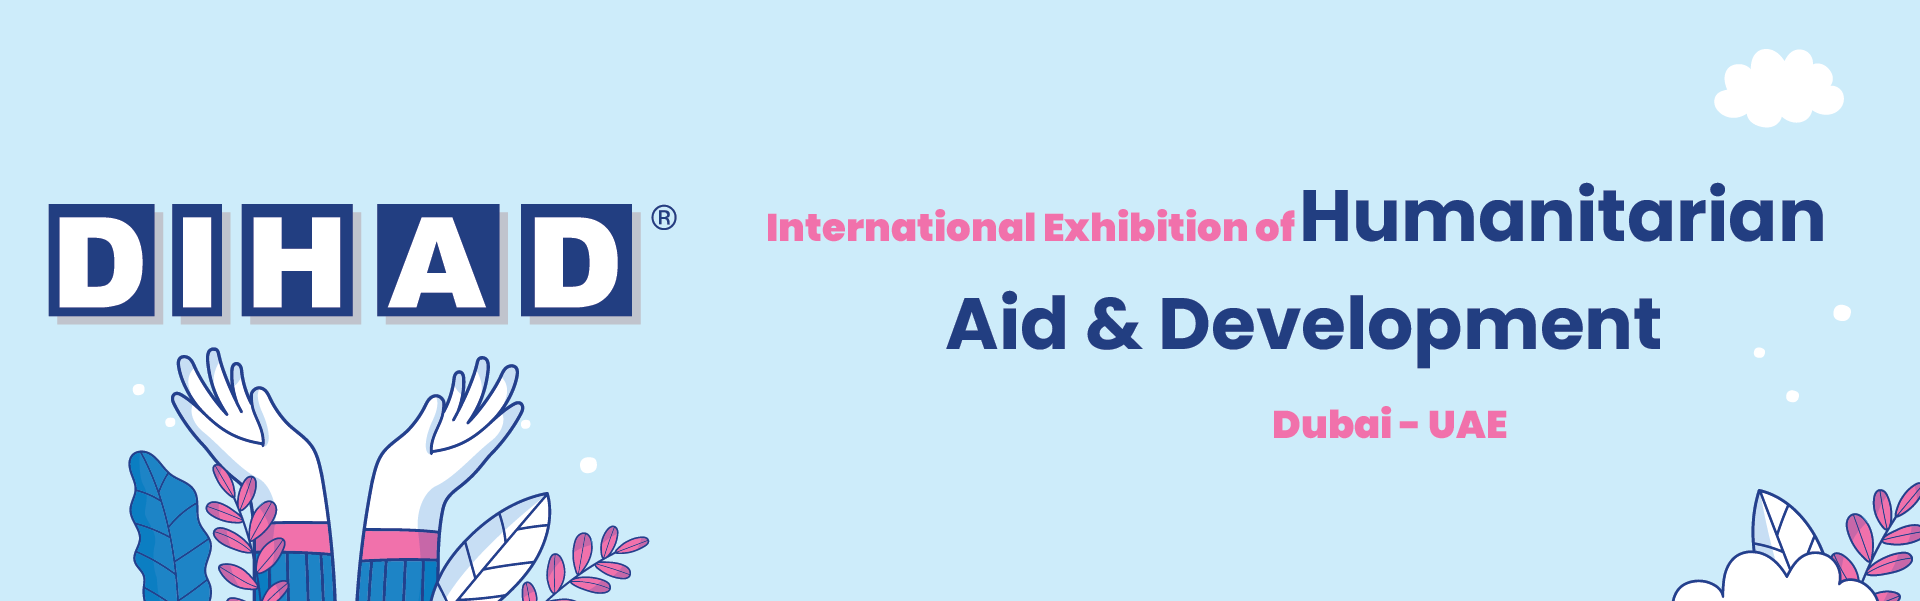 Humanitarian Aid & Development (DIHAD) Exhibition Dubai United Arab Emirates